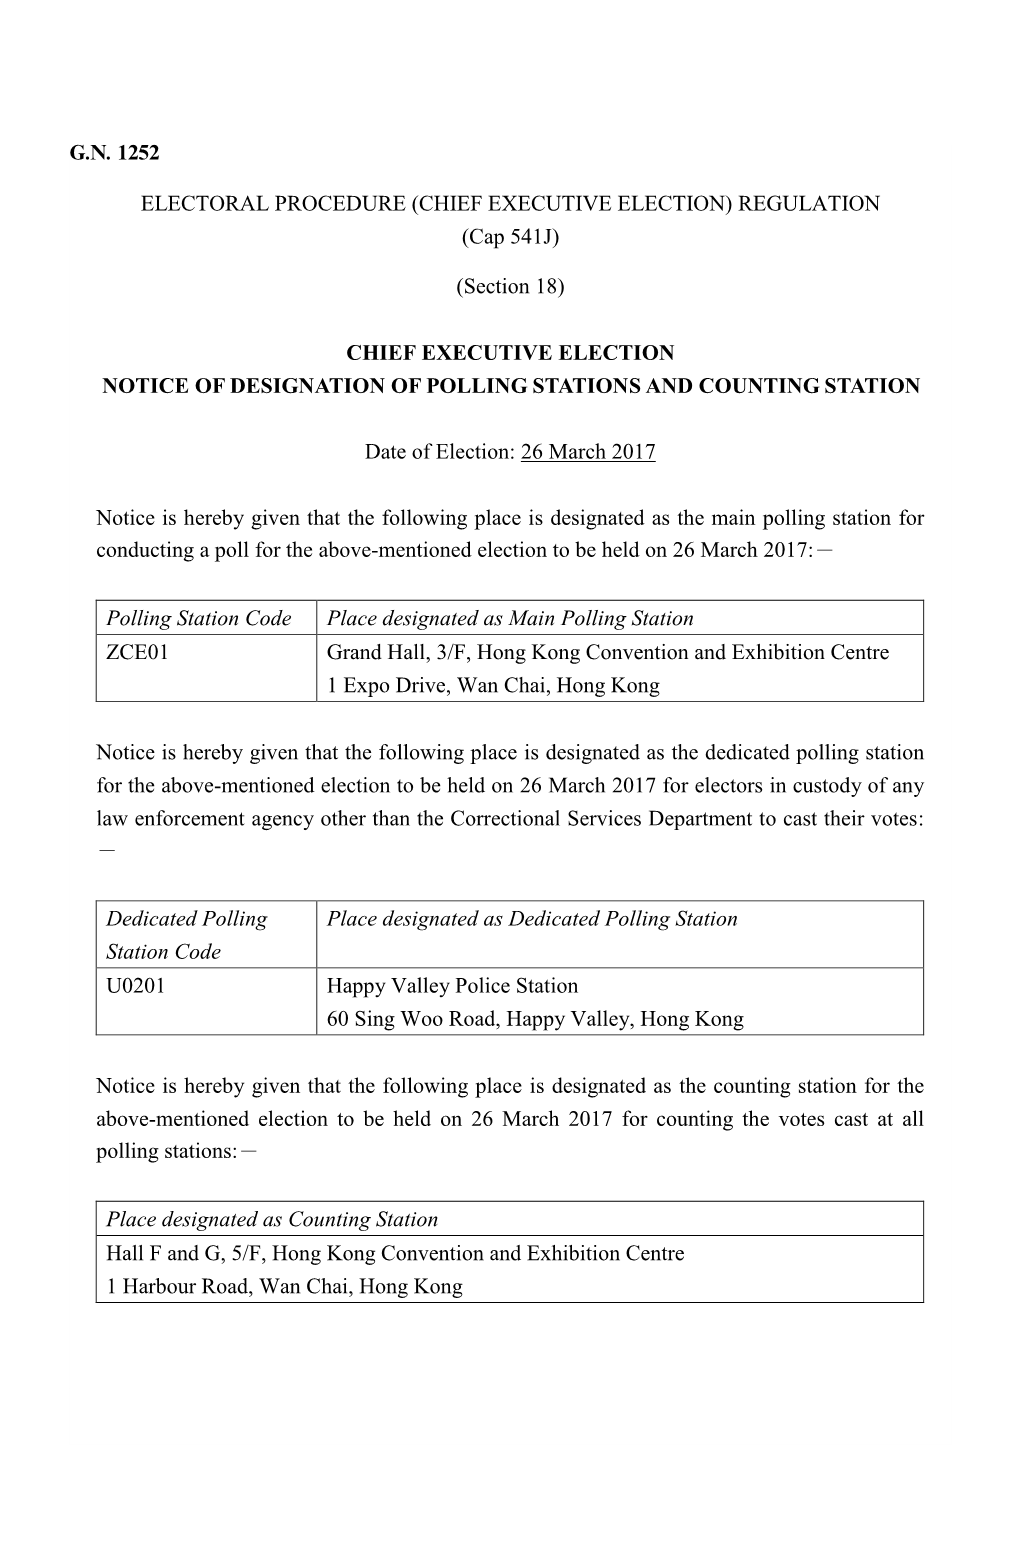 CHIEF EXECUTIVE ELECTION) REGULATION (Cap 541J)